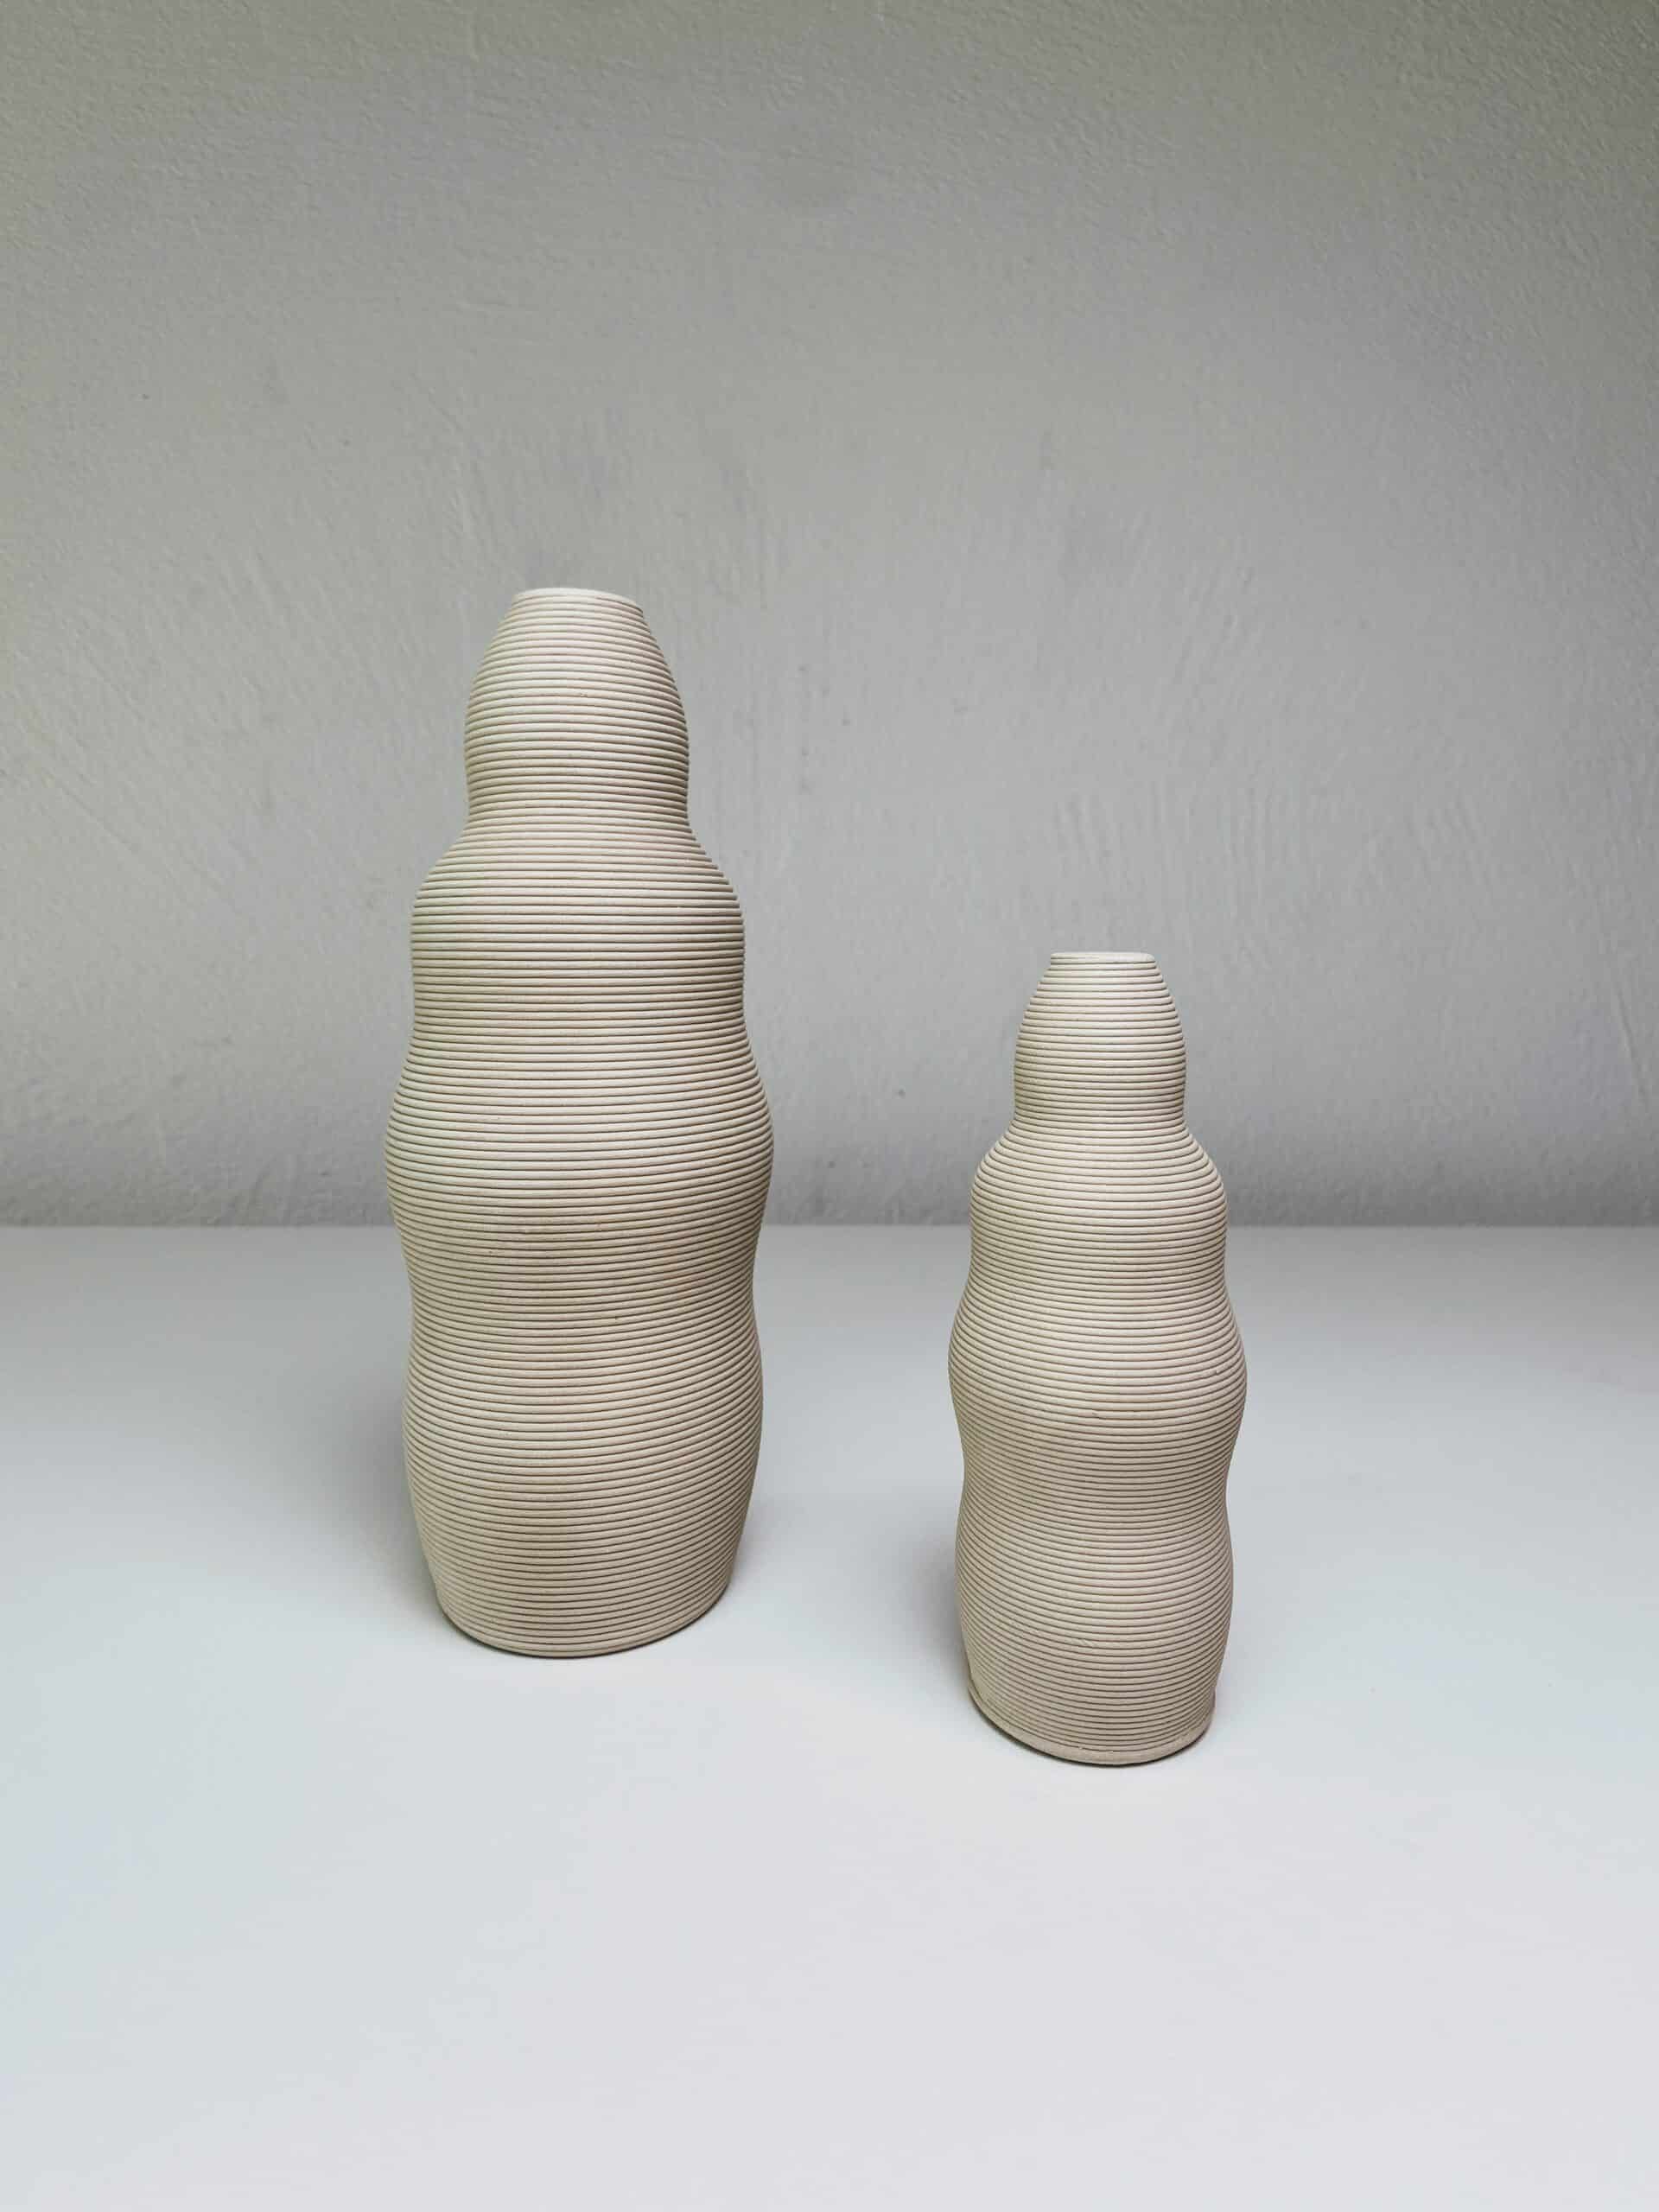 FLSCH - 3D printed ceramic vase